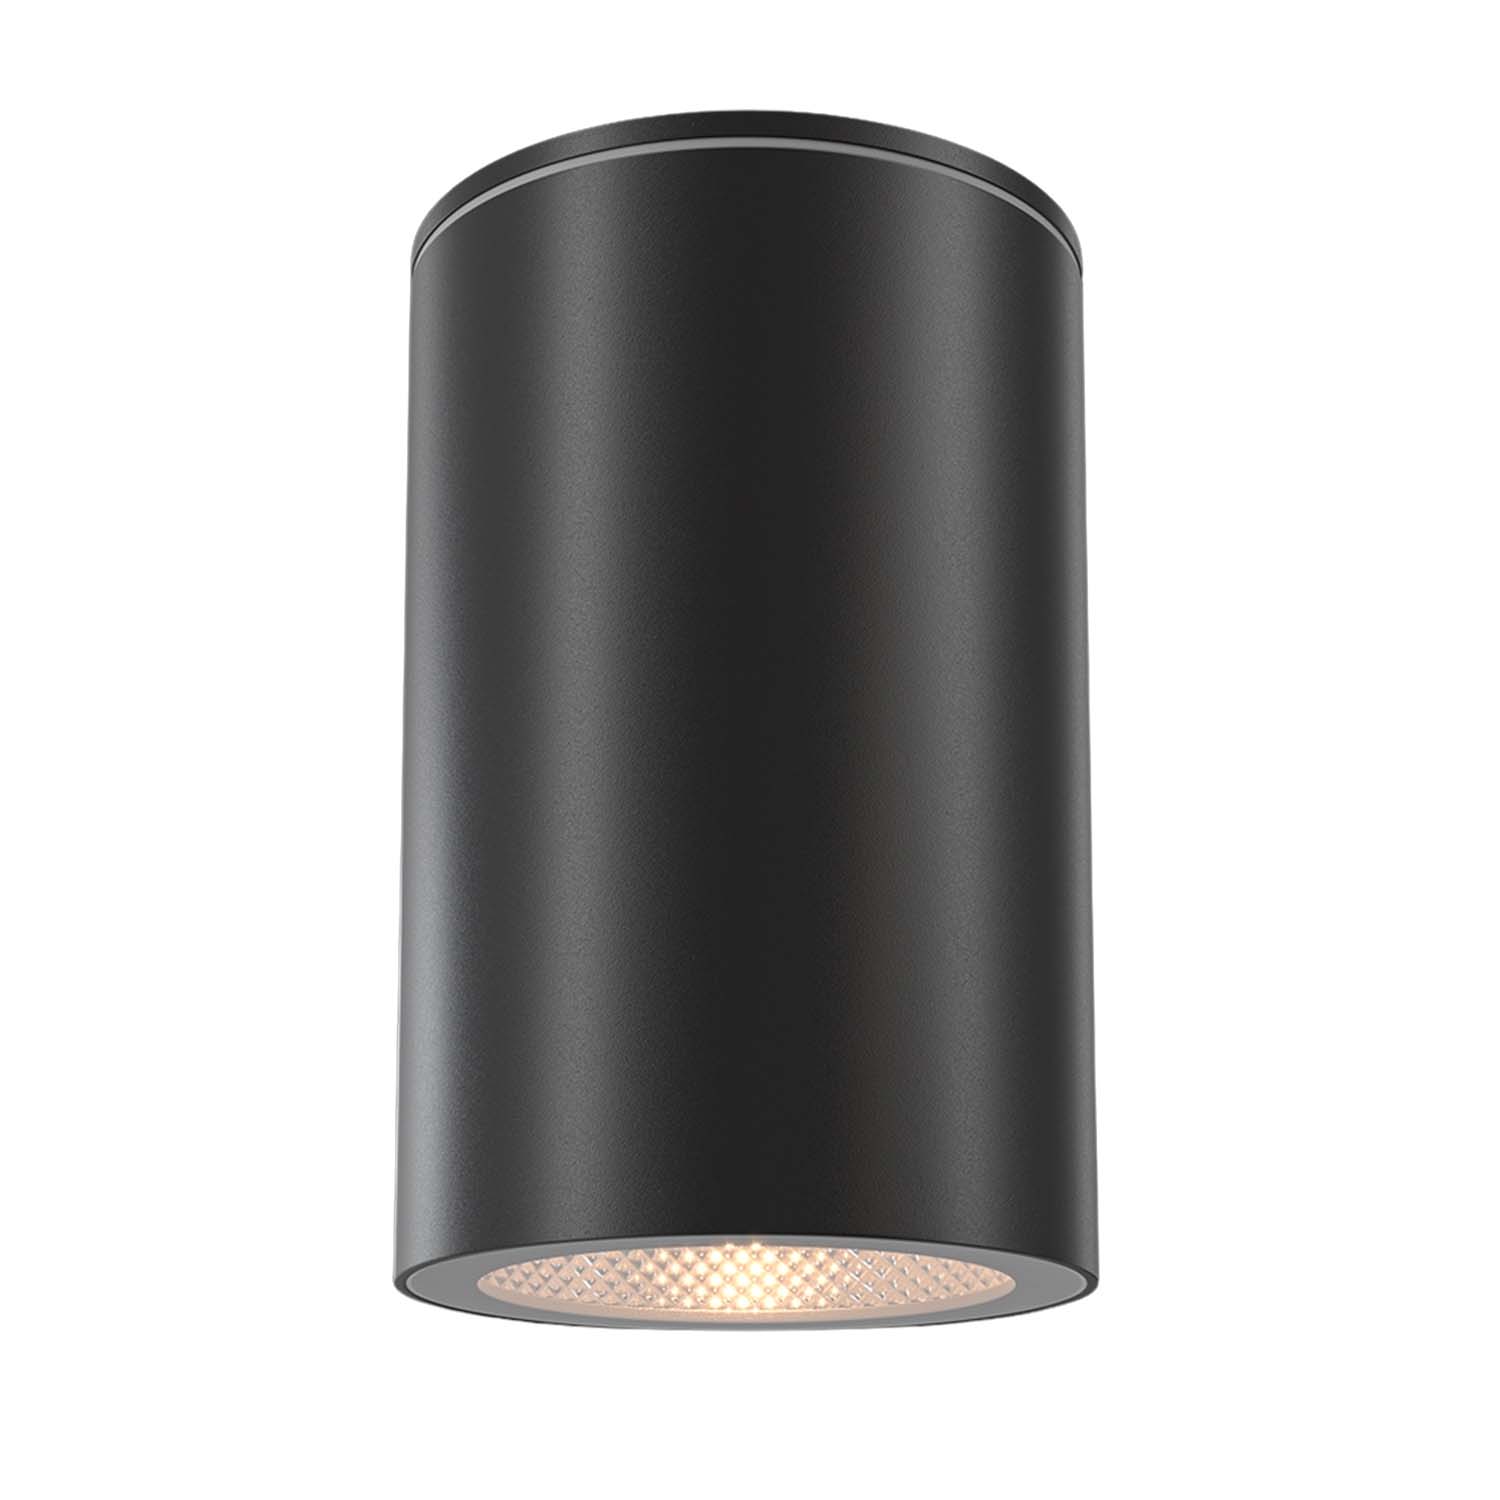 ROLL - Design waterproof black surface-mounted spotlight, outdoor or bathroom